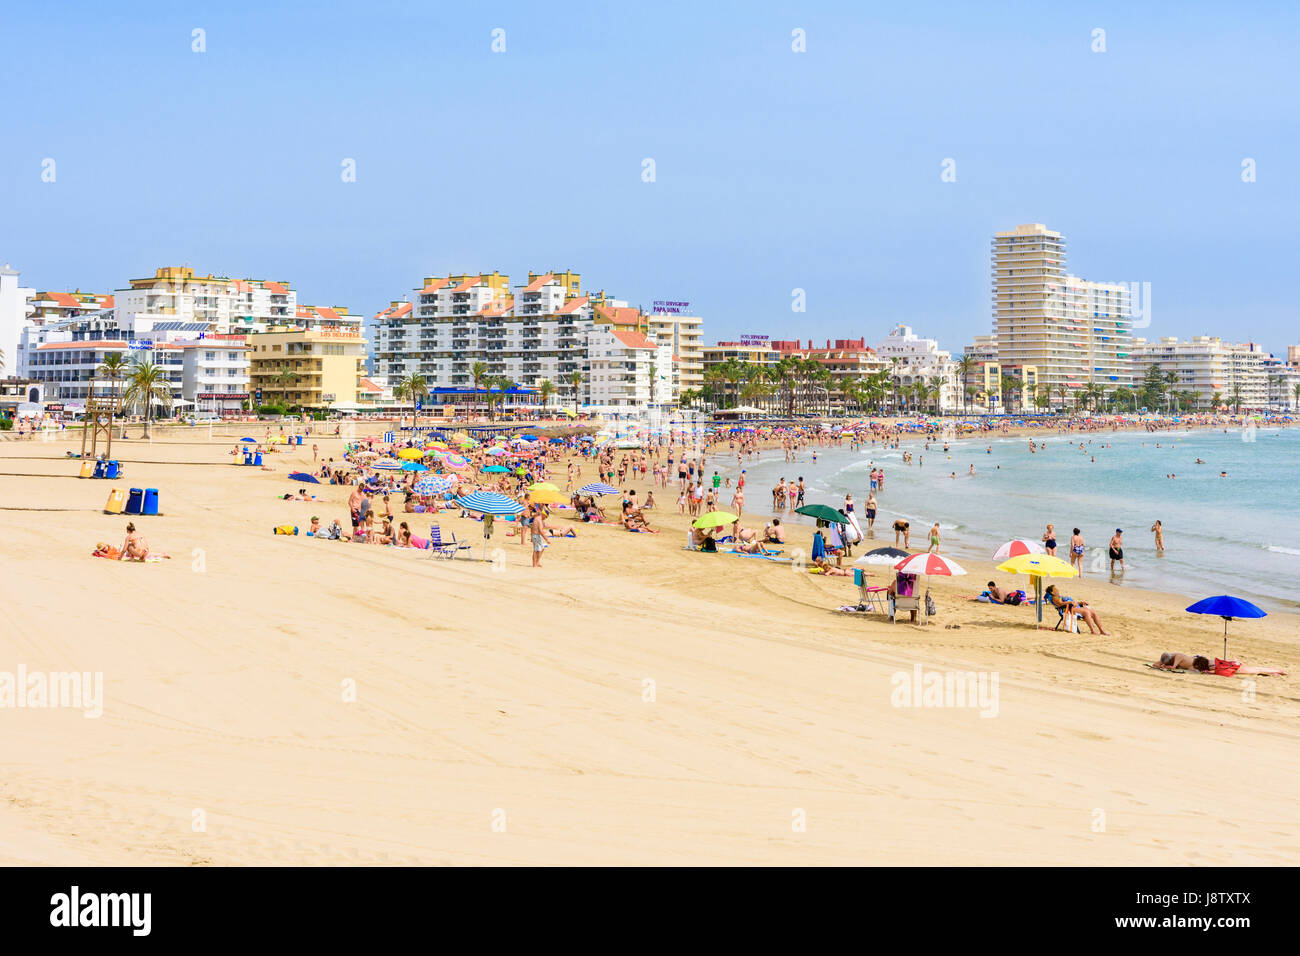 Crowded beach scene on the popular soft sand of Playa Norte, Peniscola, Spain Stock Photo